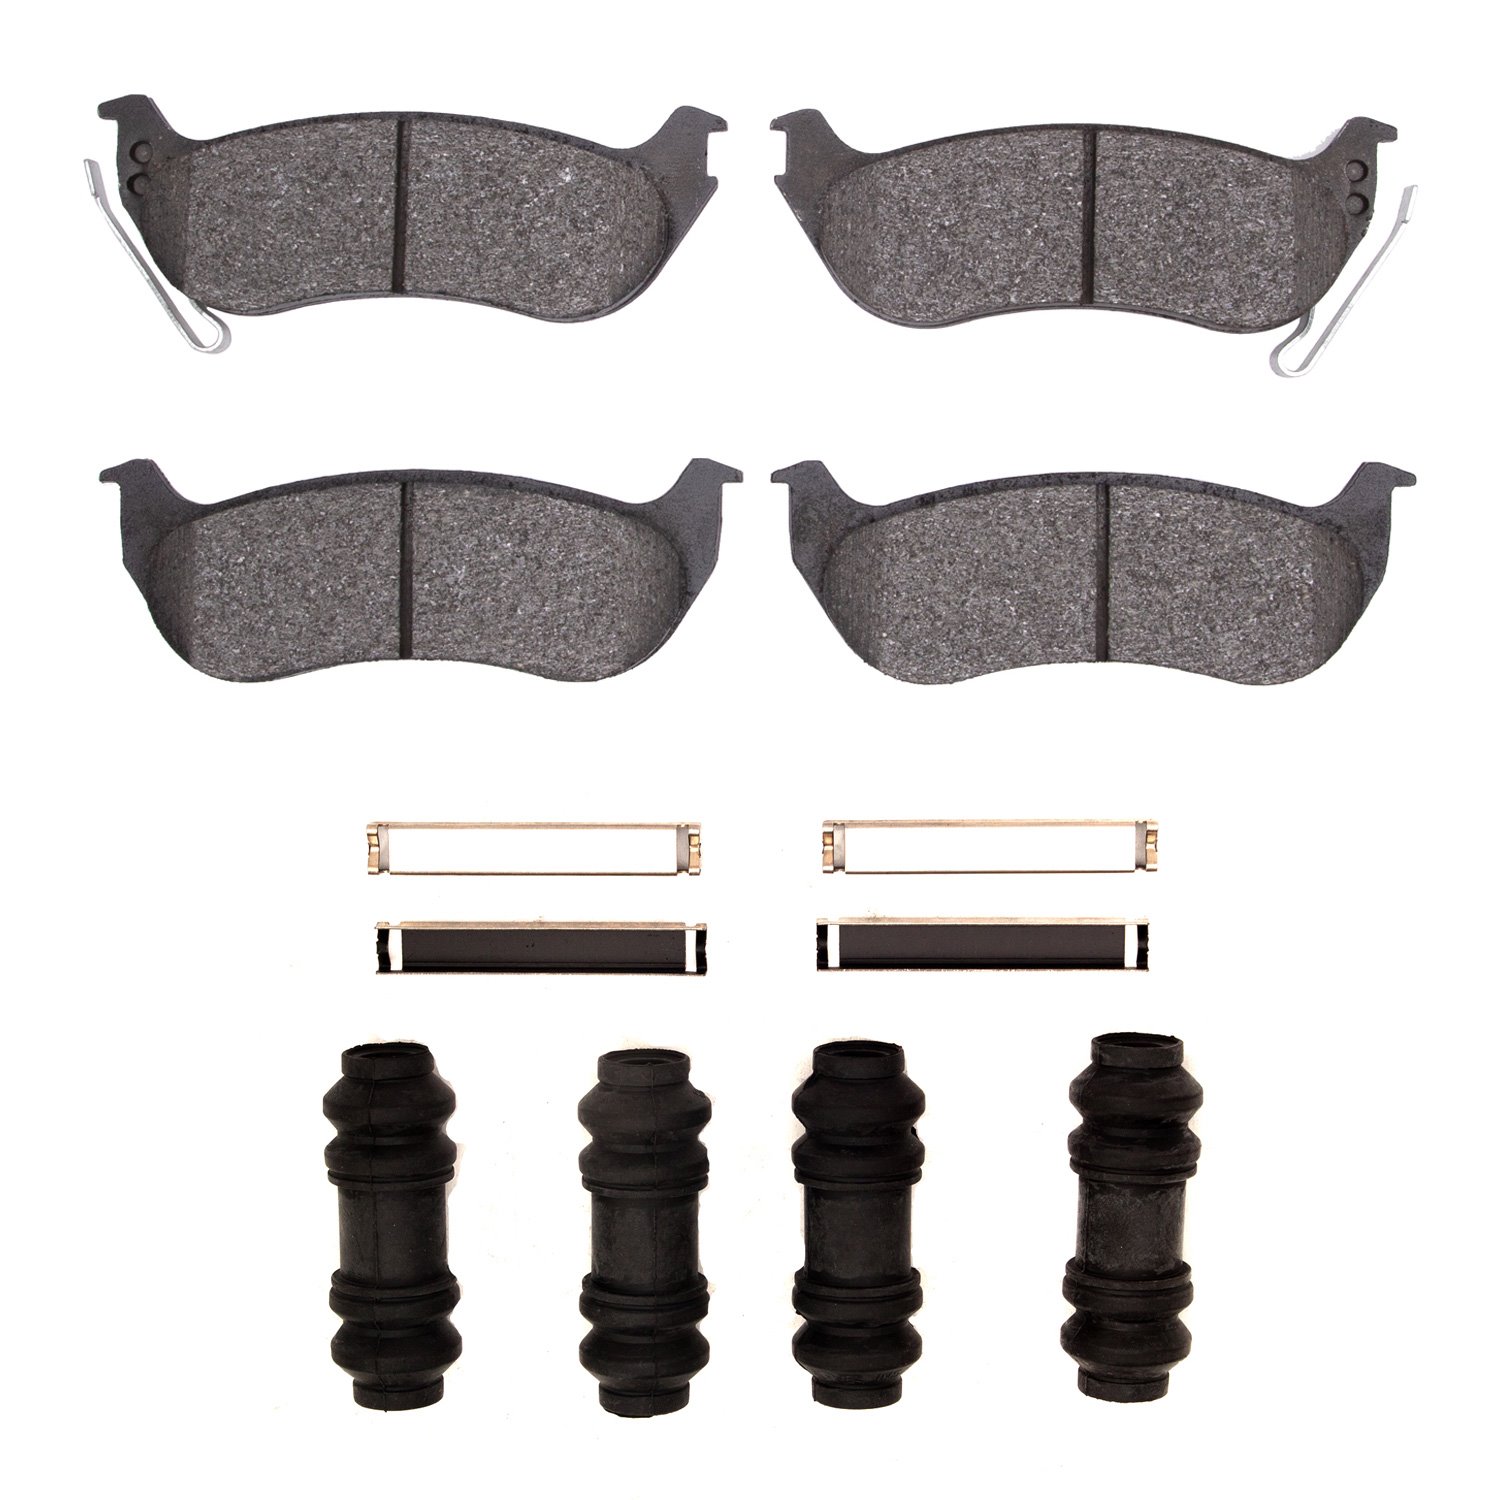 1310-0964-01 3000-Series Ceramic Brake Pads & Hardware Kit, 2003-2010 Multiple Makes/Models, Position: Rear